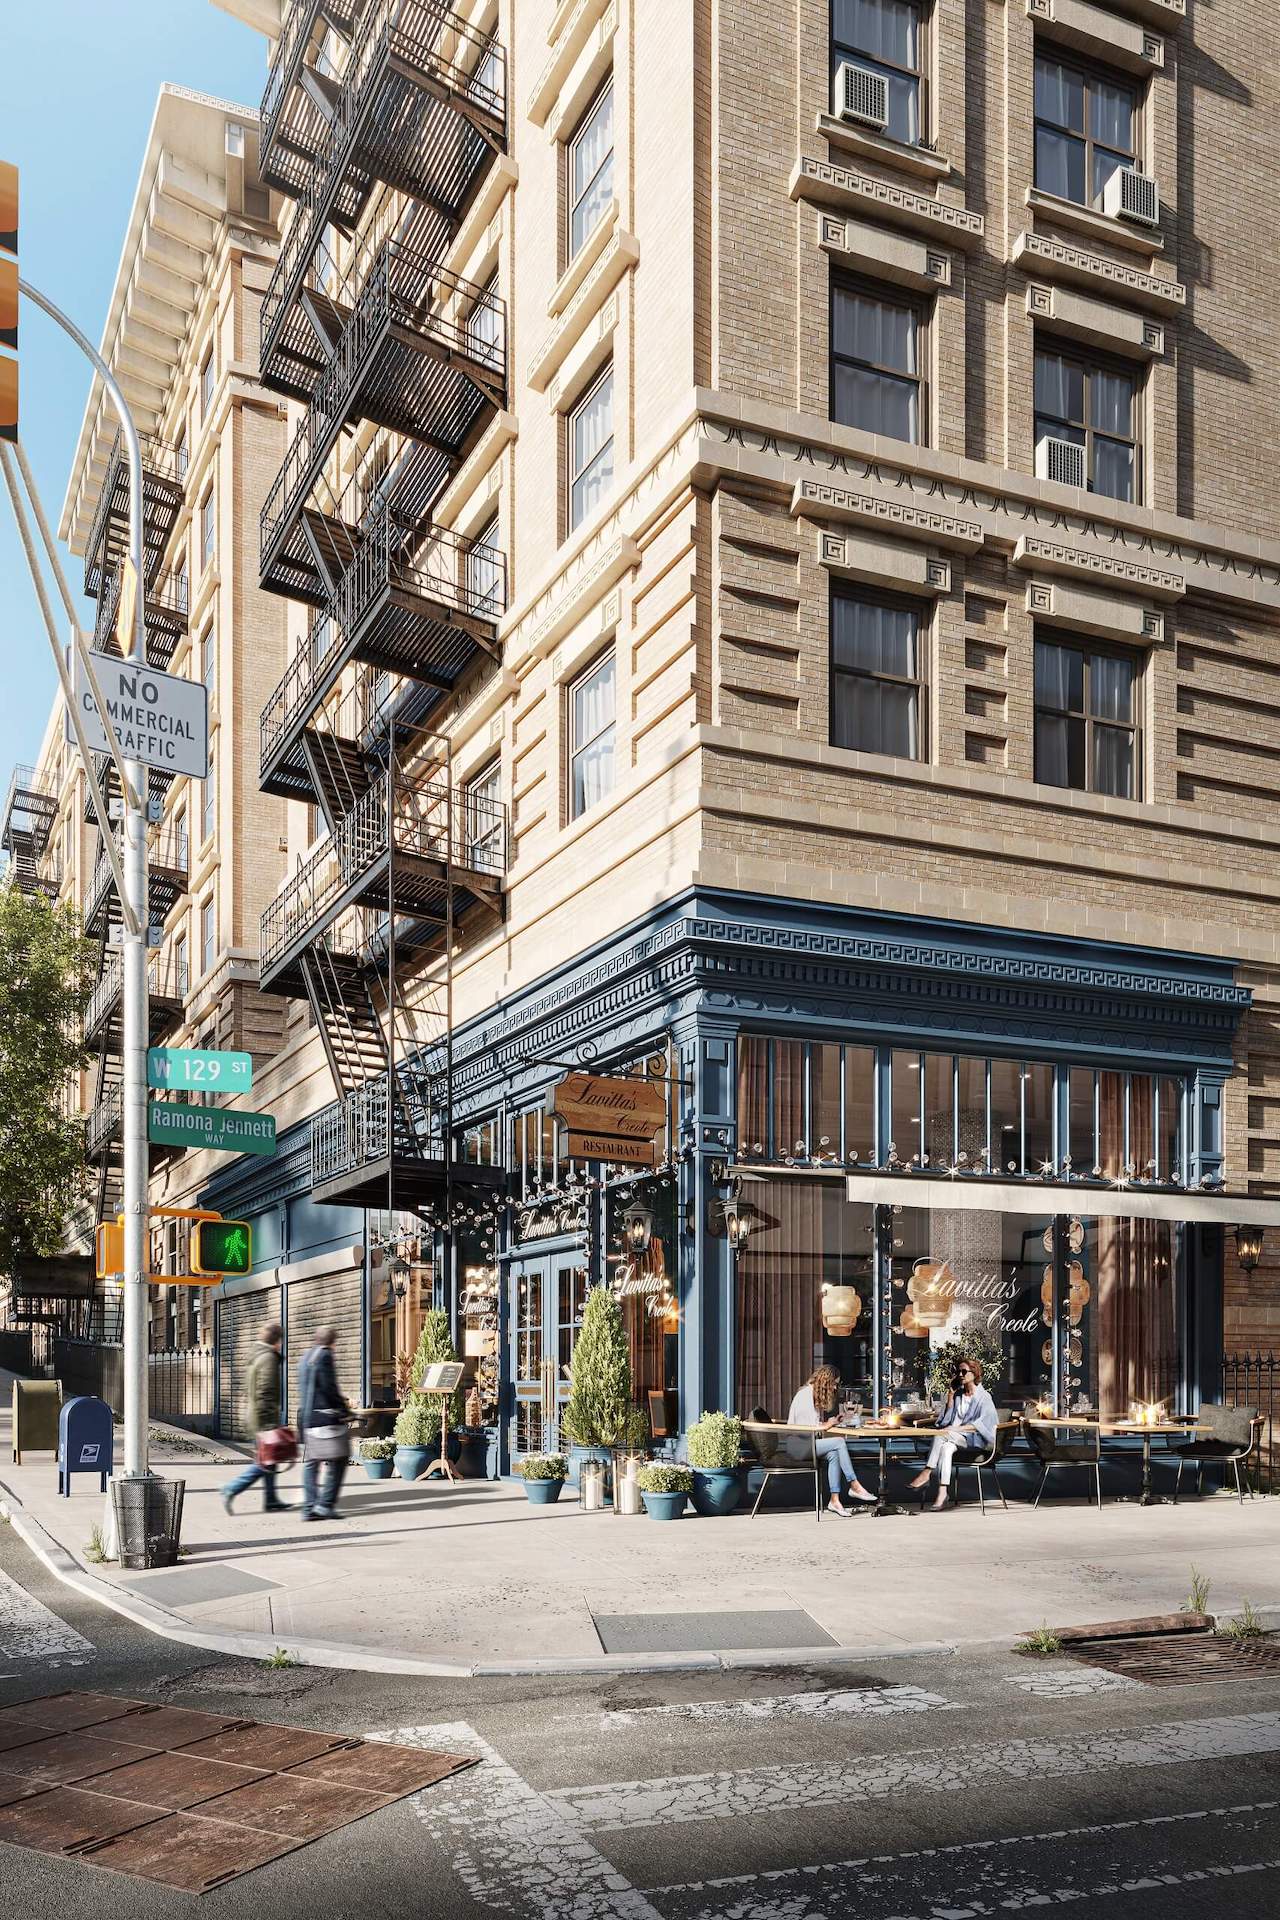 3D Architectural Rendering of New York Restaurant Exterior